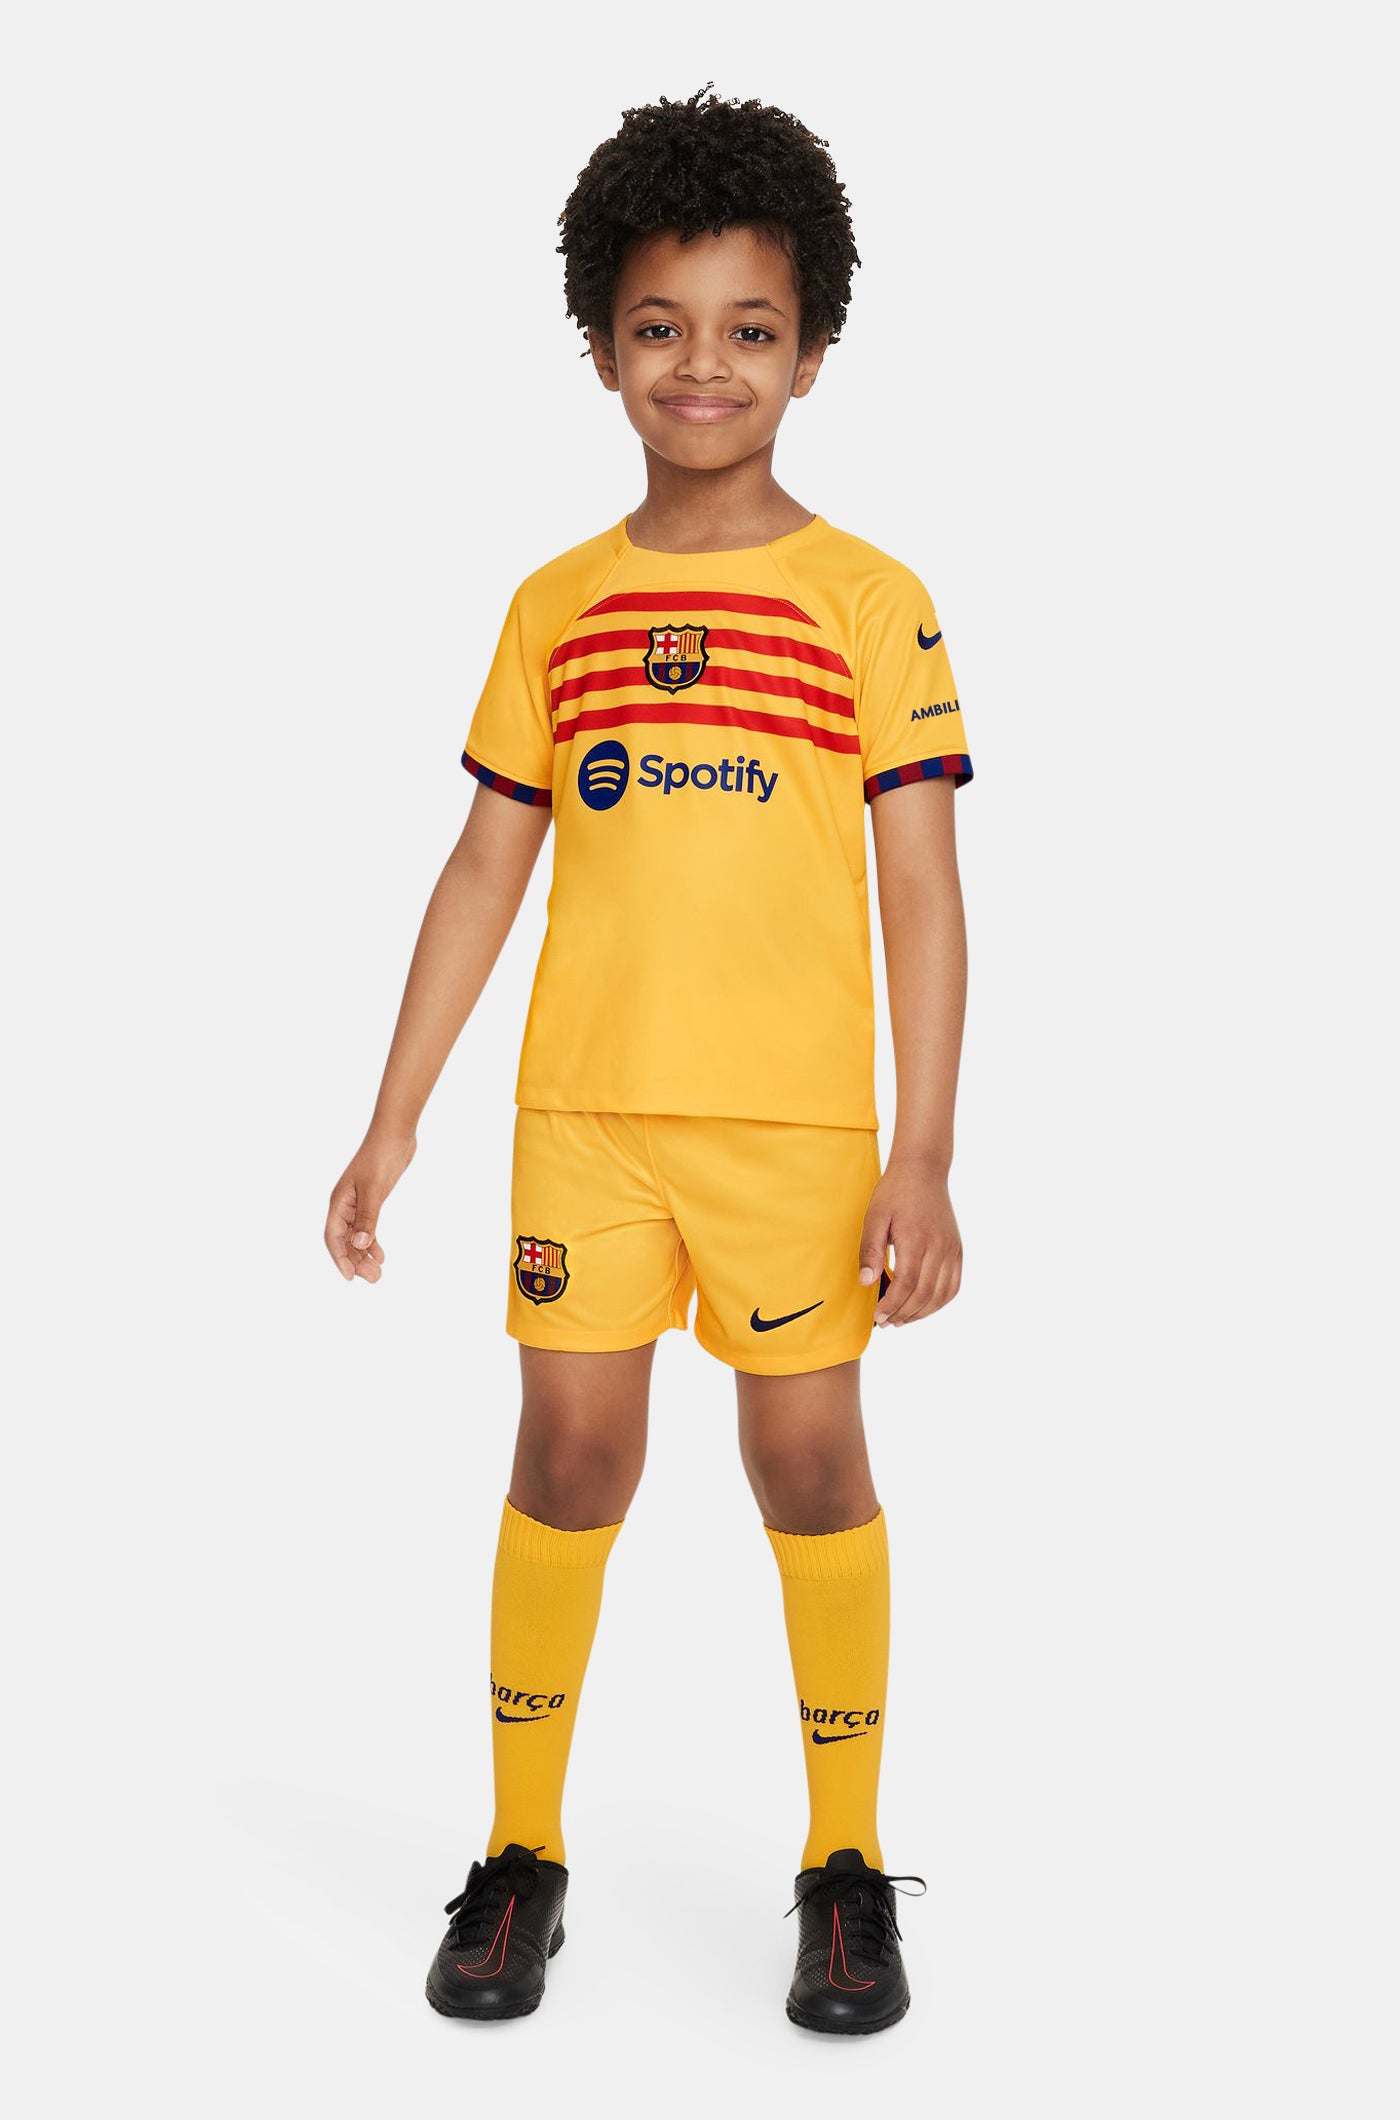 FC Barcelona fourth kit 22/23 - Little Kids - R. ARAUJO